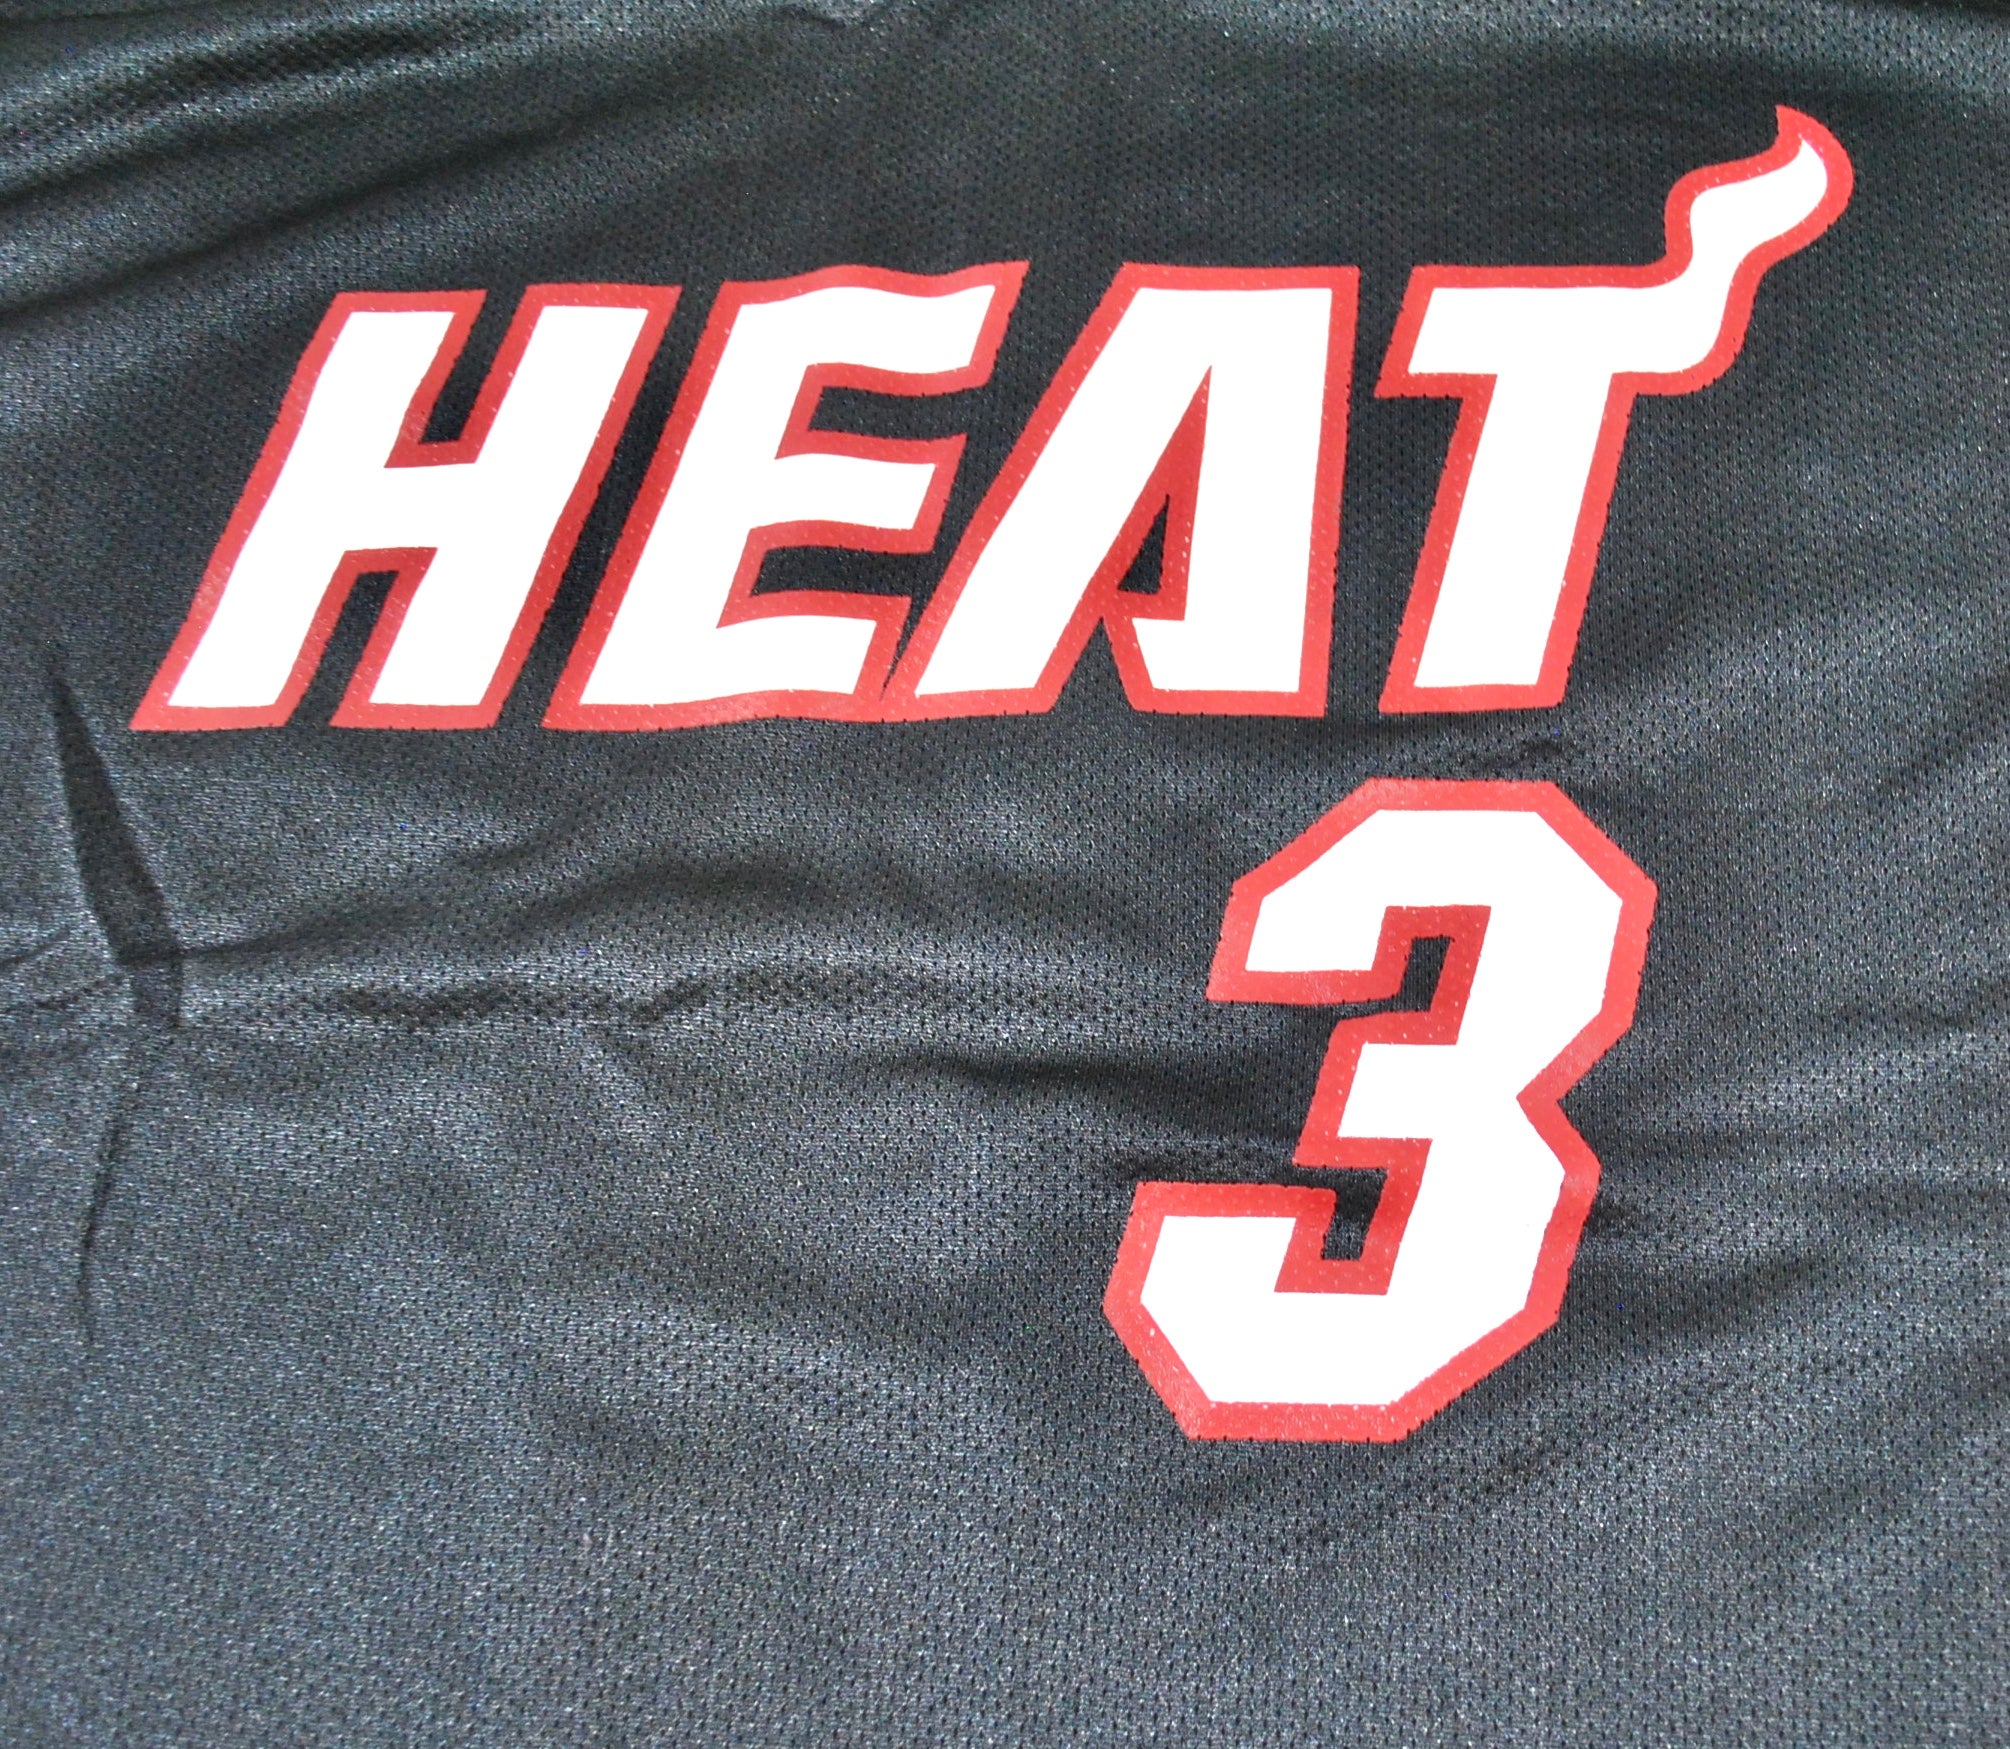 Miami Heat Dwayne Wade Adidas Basketball Jersey Black & Red Color